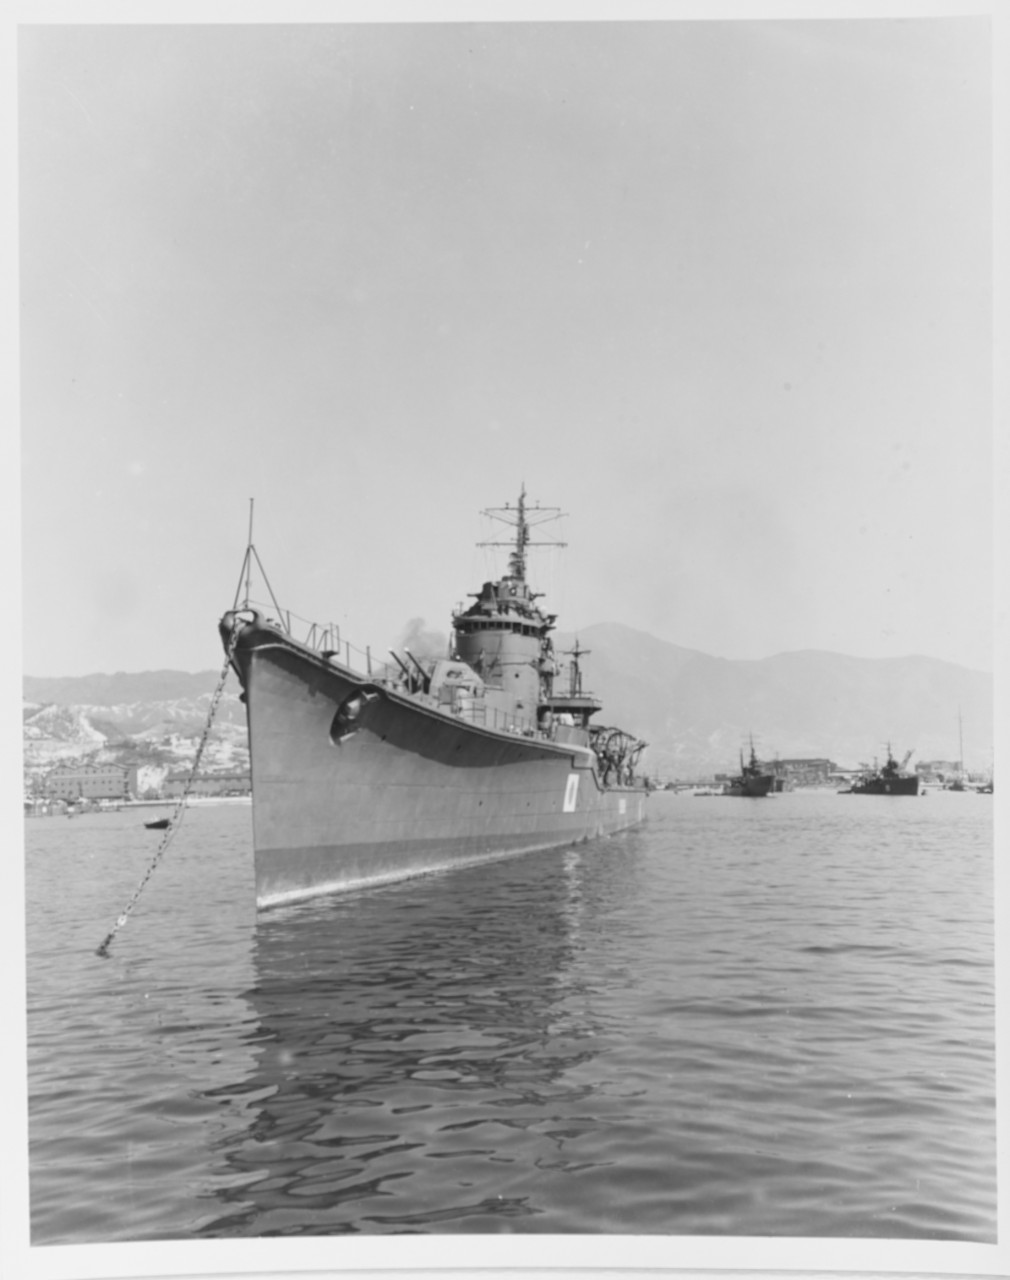 YOITSUKI (Japanese destroyer, 1944)